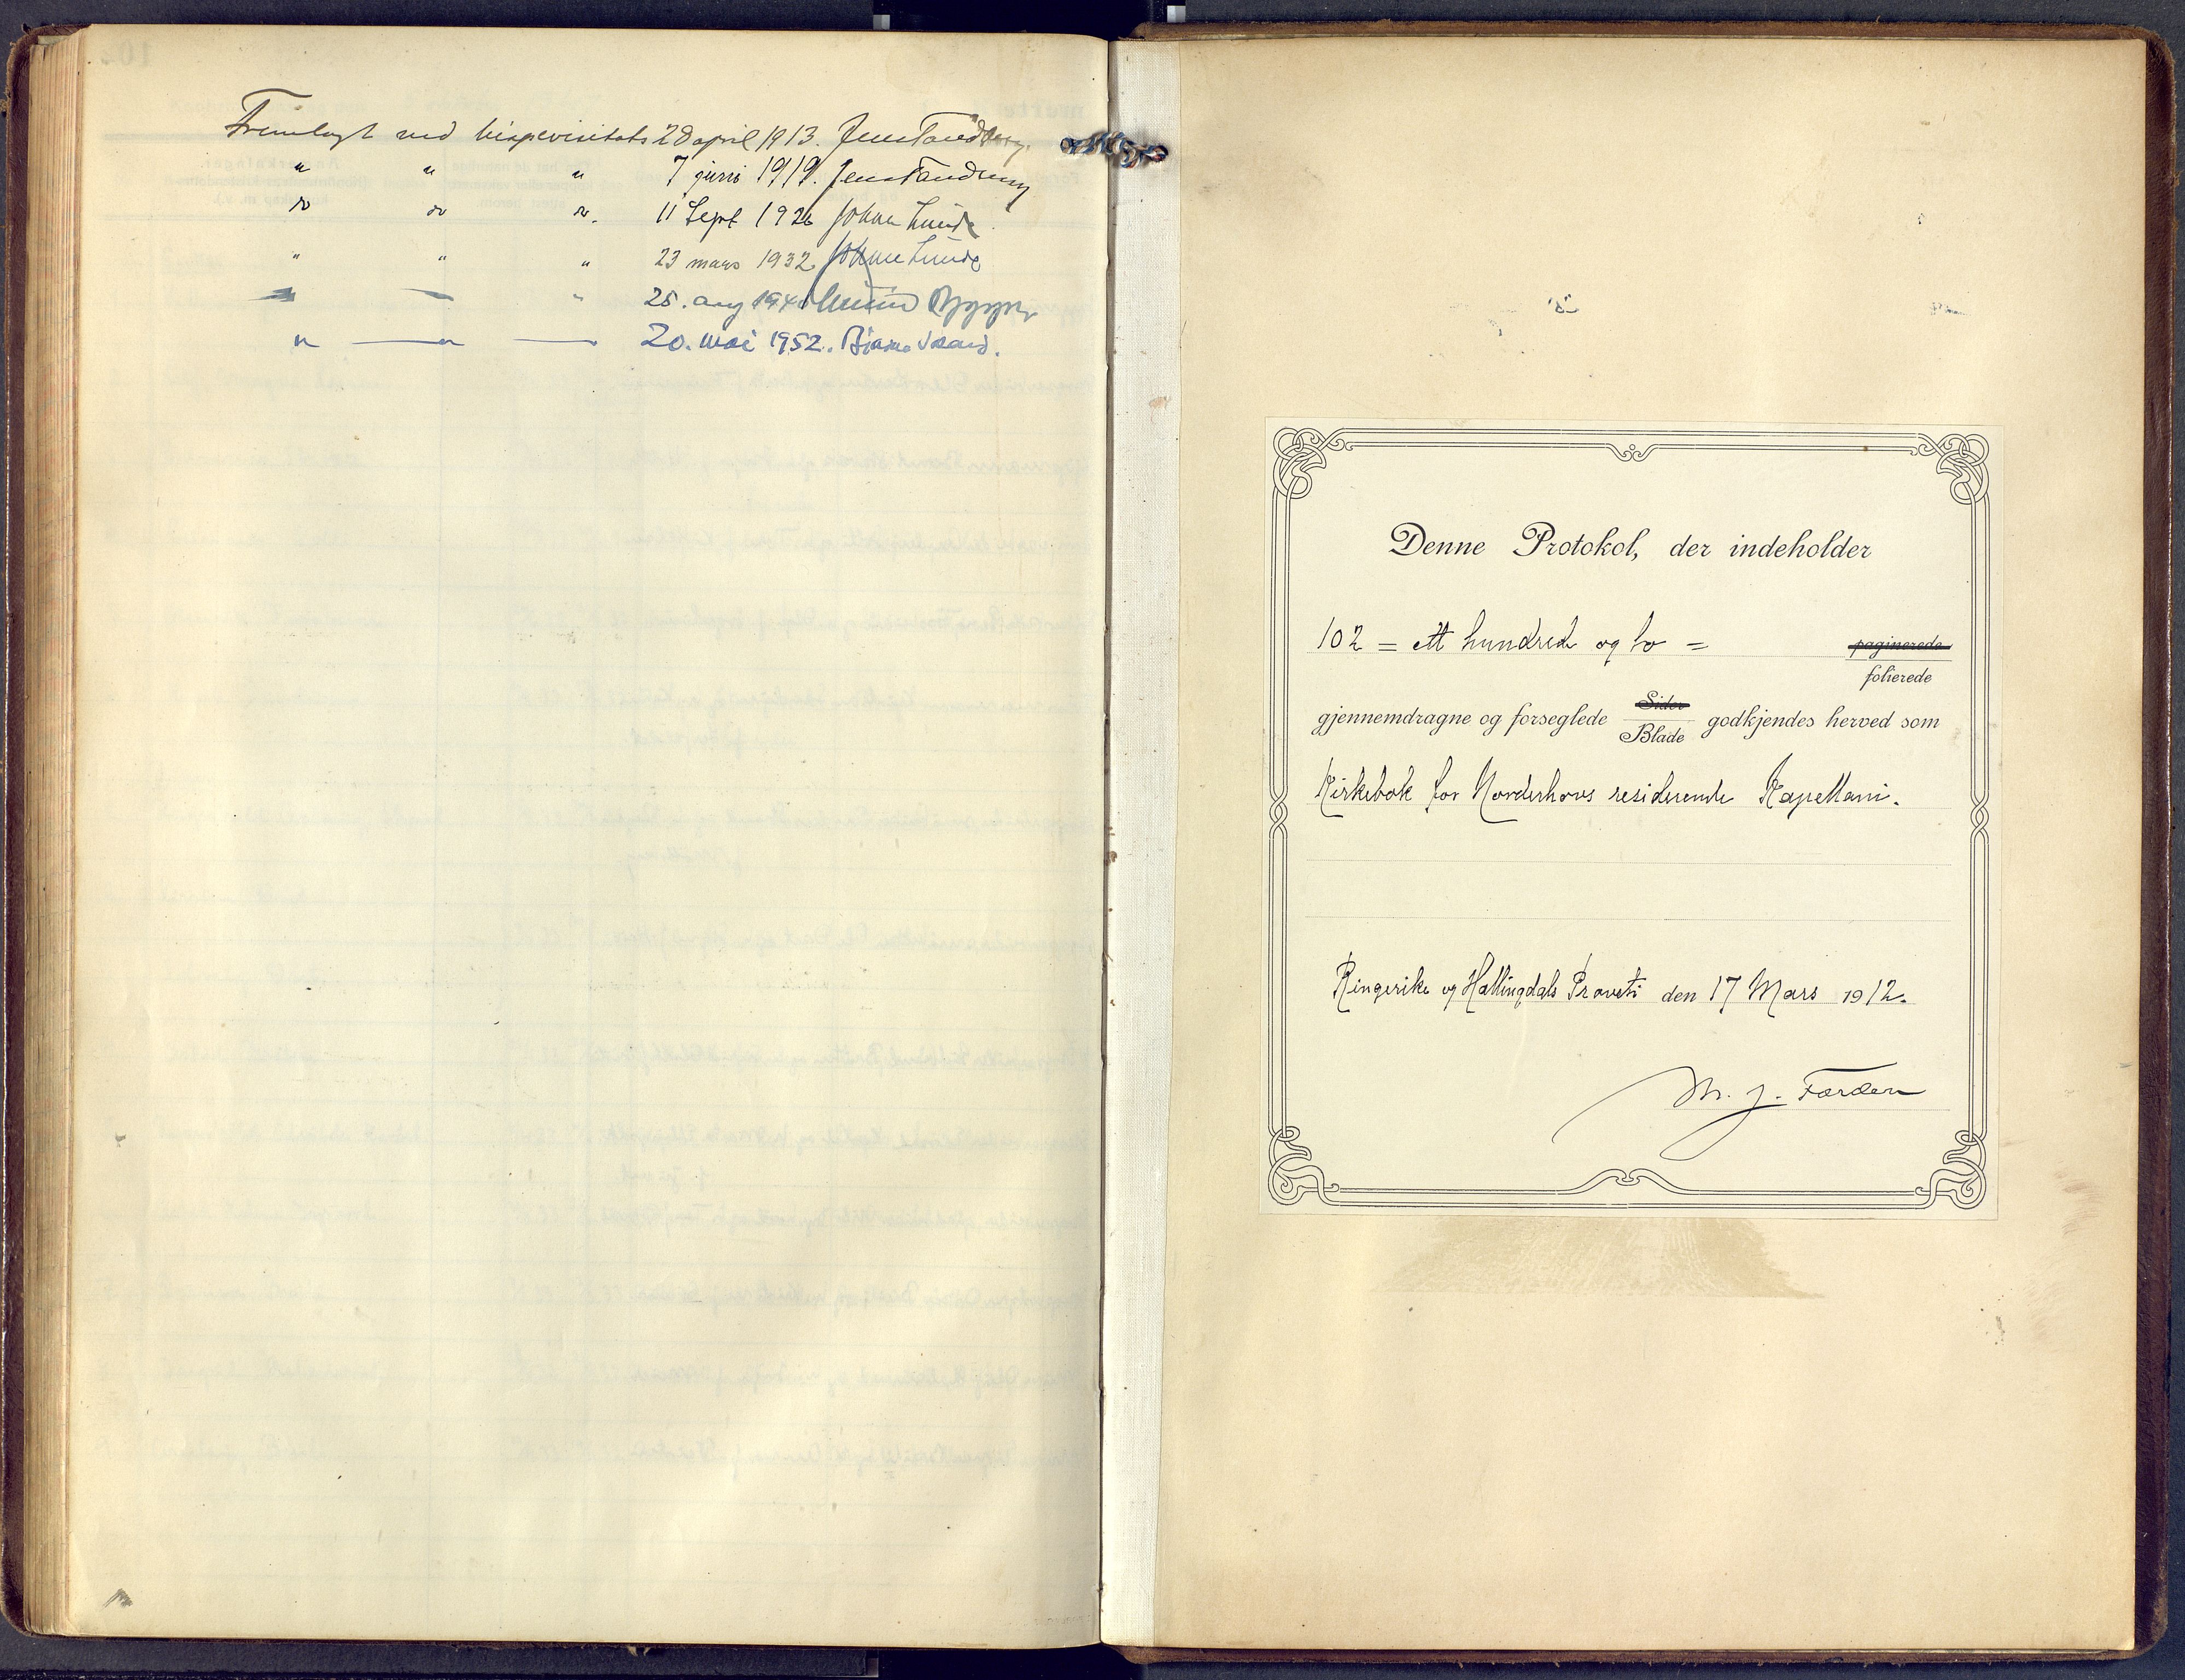 Lunder kirkebøker, SAKO/A-629/F/Fa/L0002: Ministerialbok nr. I 2, 1906-1947